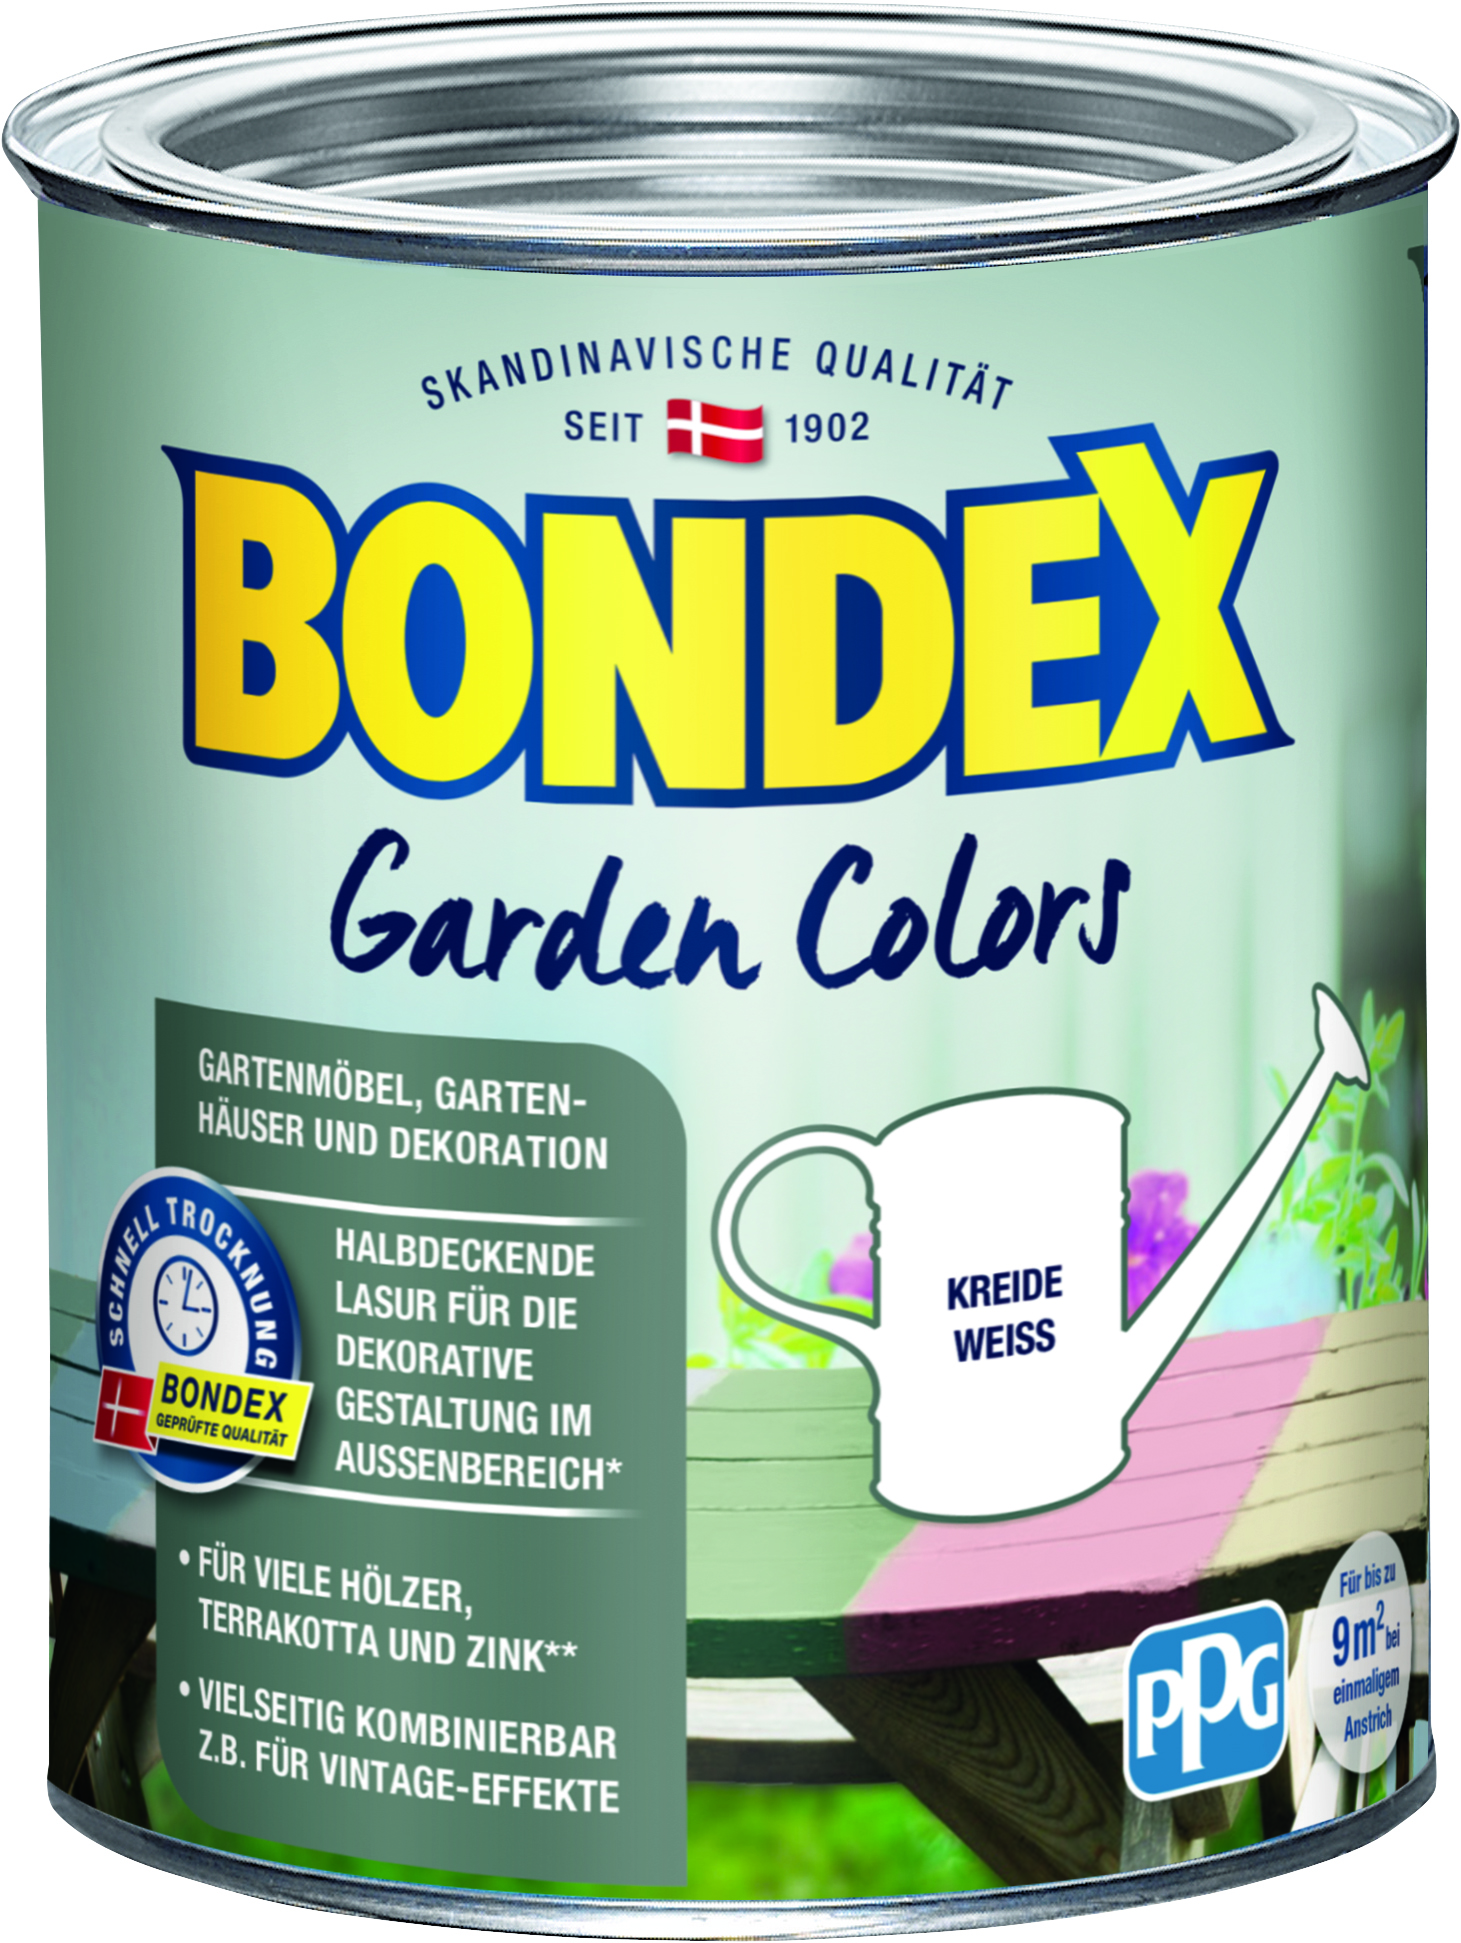 Bondex Garden Colors Kreide Weiß, 750 ml